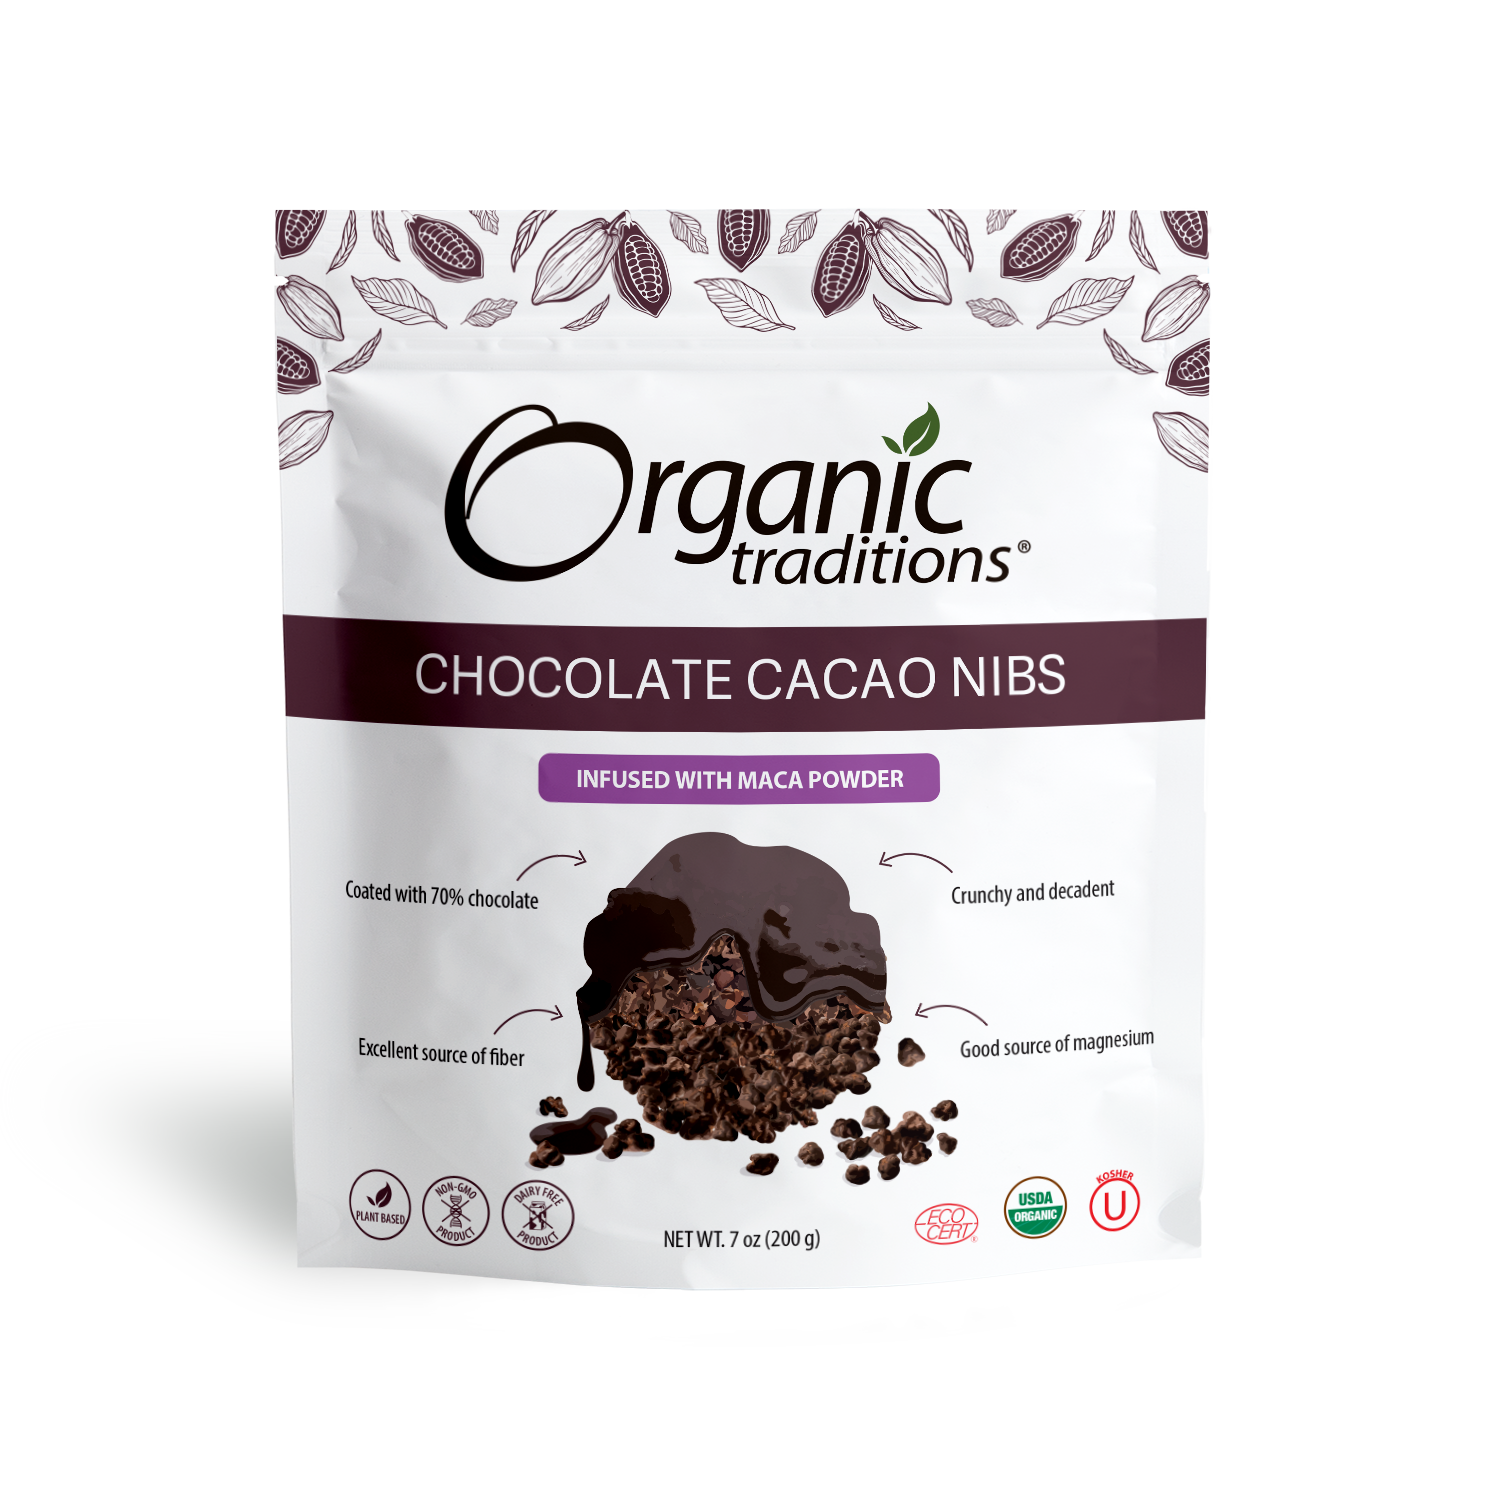 Organic Chocolate Cacao Nibs with Maca